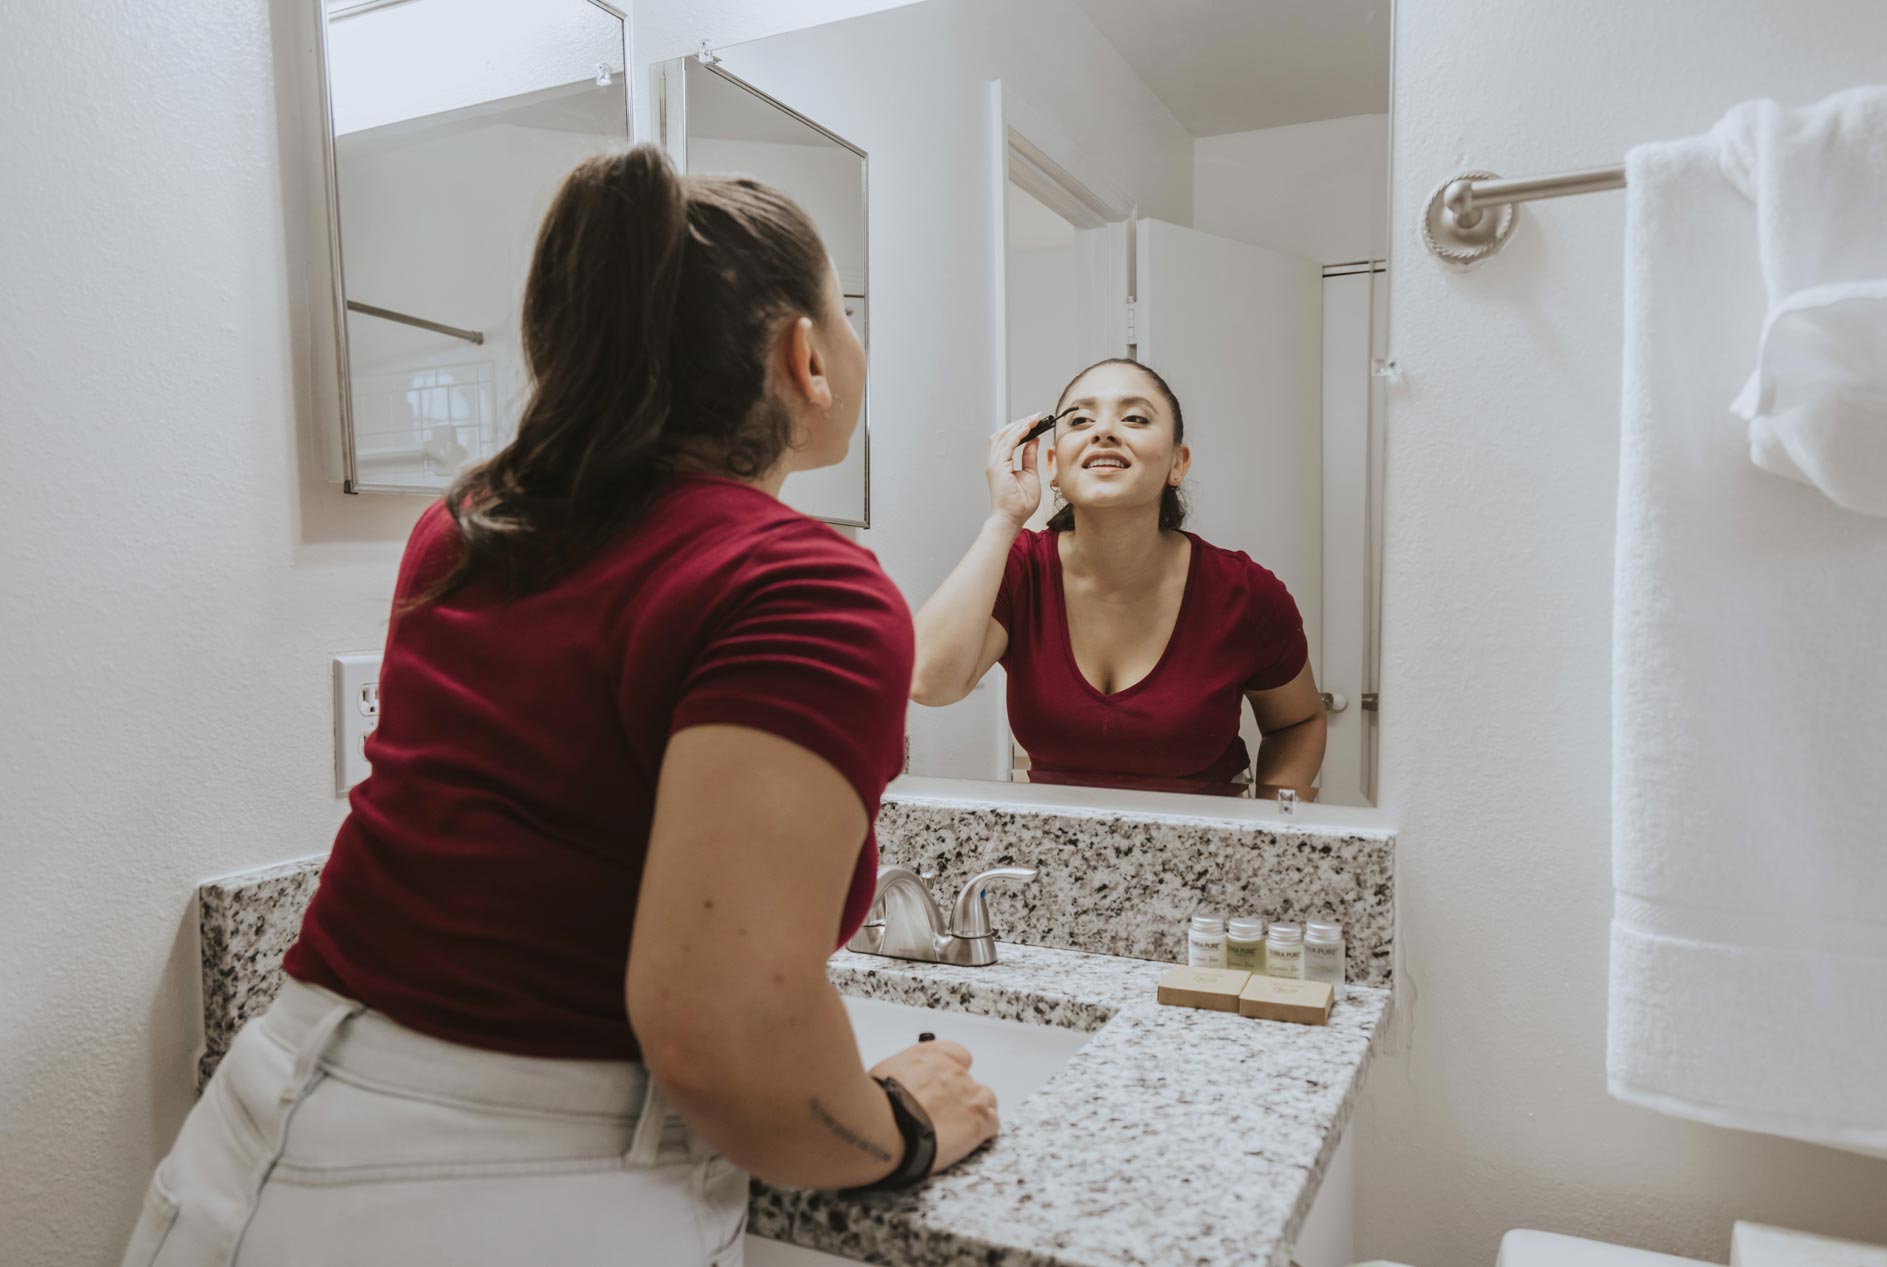 Arbors Lee Vista woman does make-up in bathroom